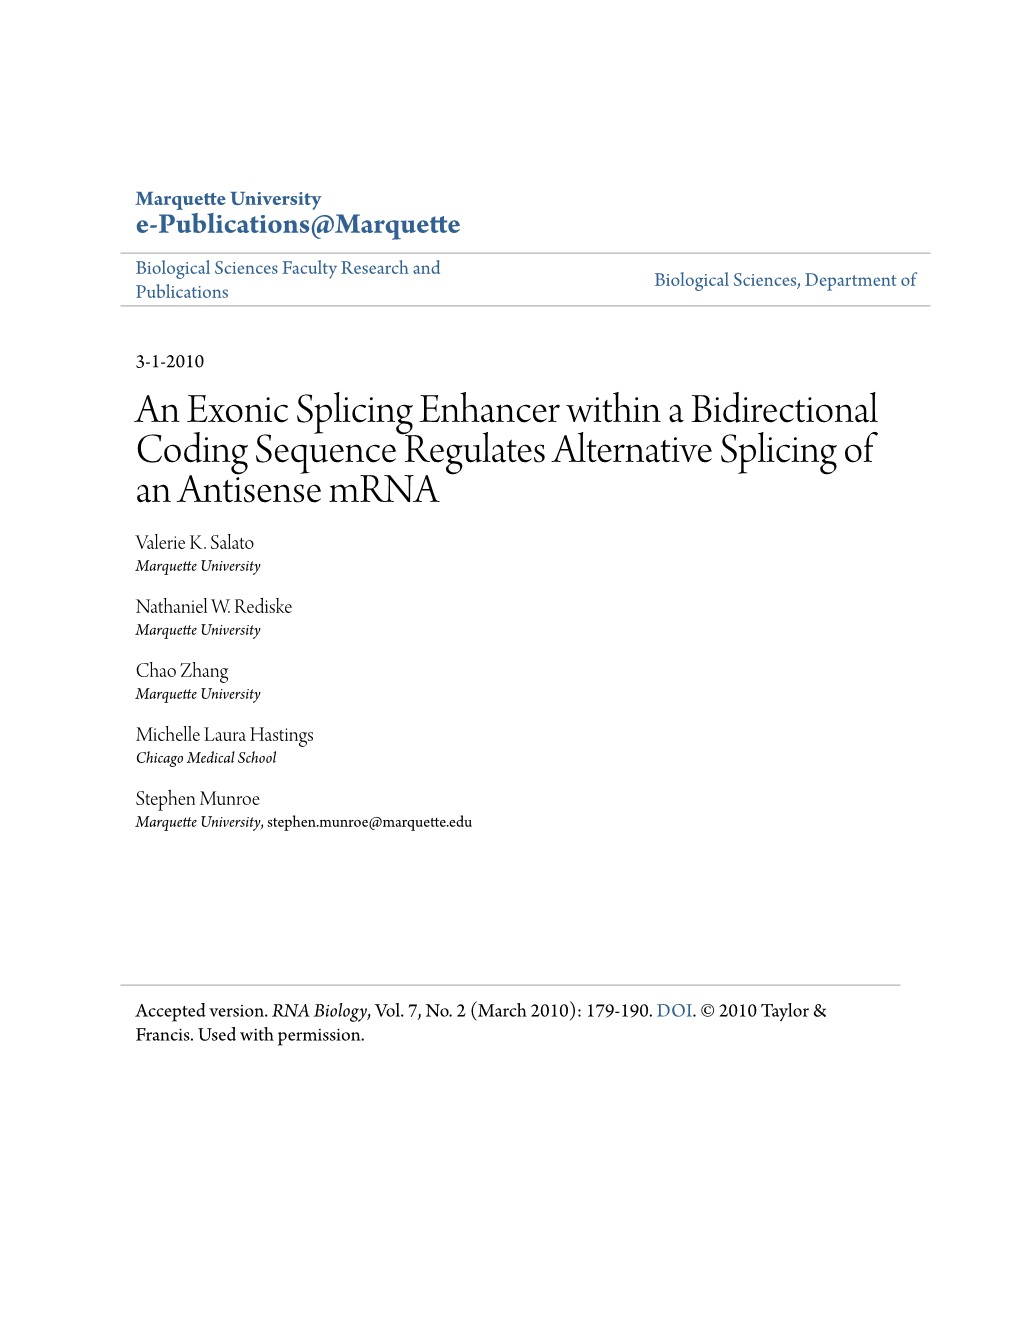 An Exonic Splicing Enhancer Within a Bidirectional Coding Sequence Regulates Alternative Splicing of an Antisense Mrna Valerie K